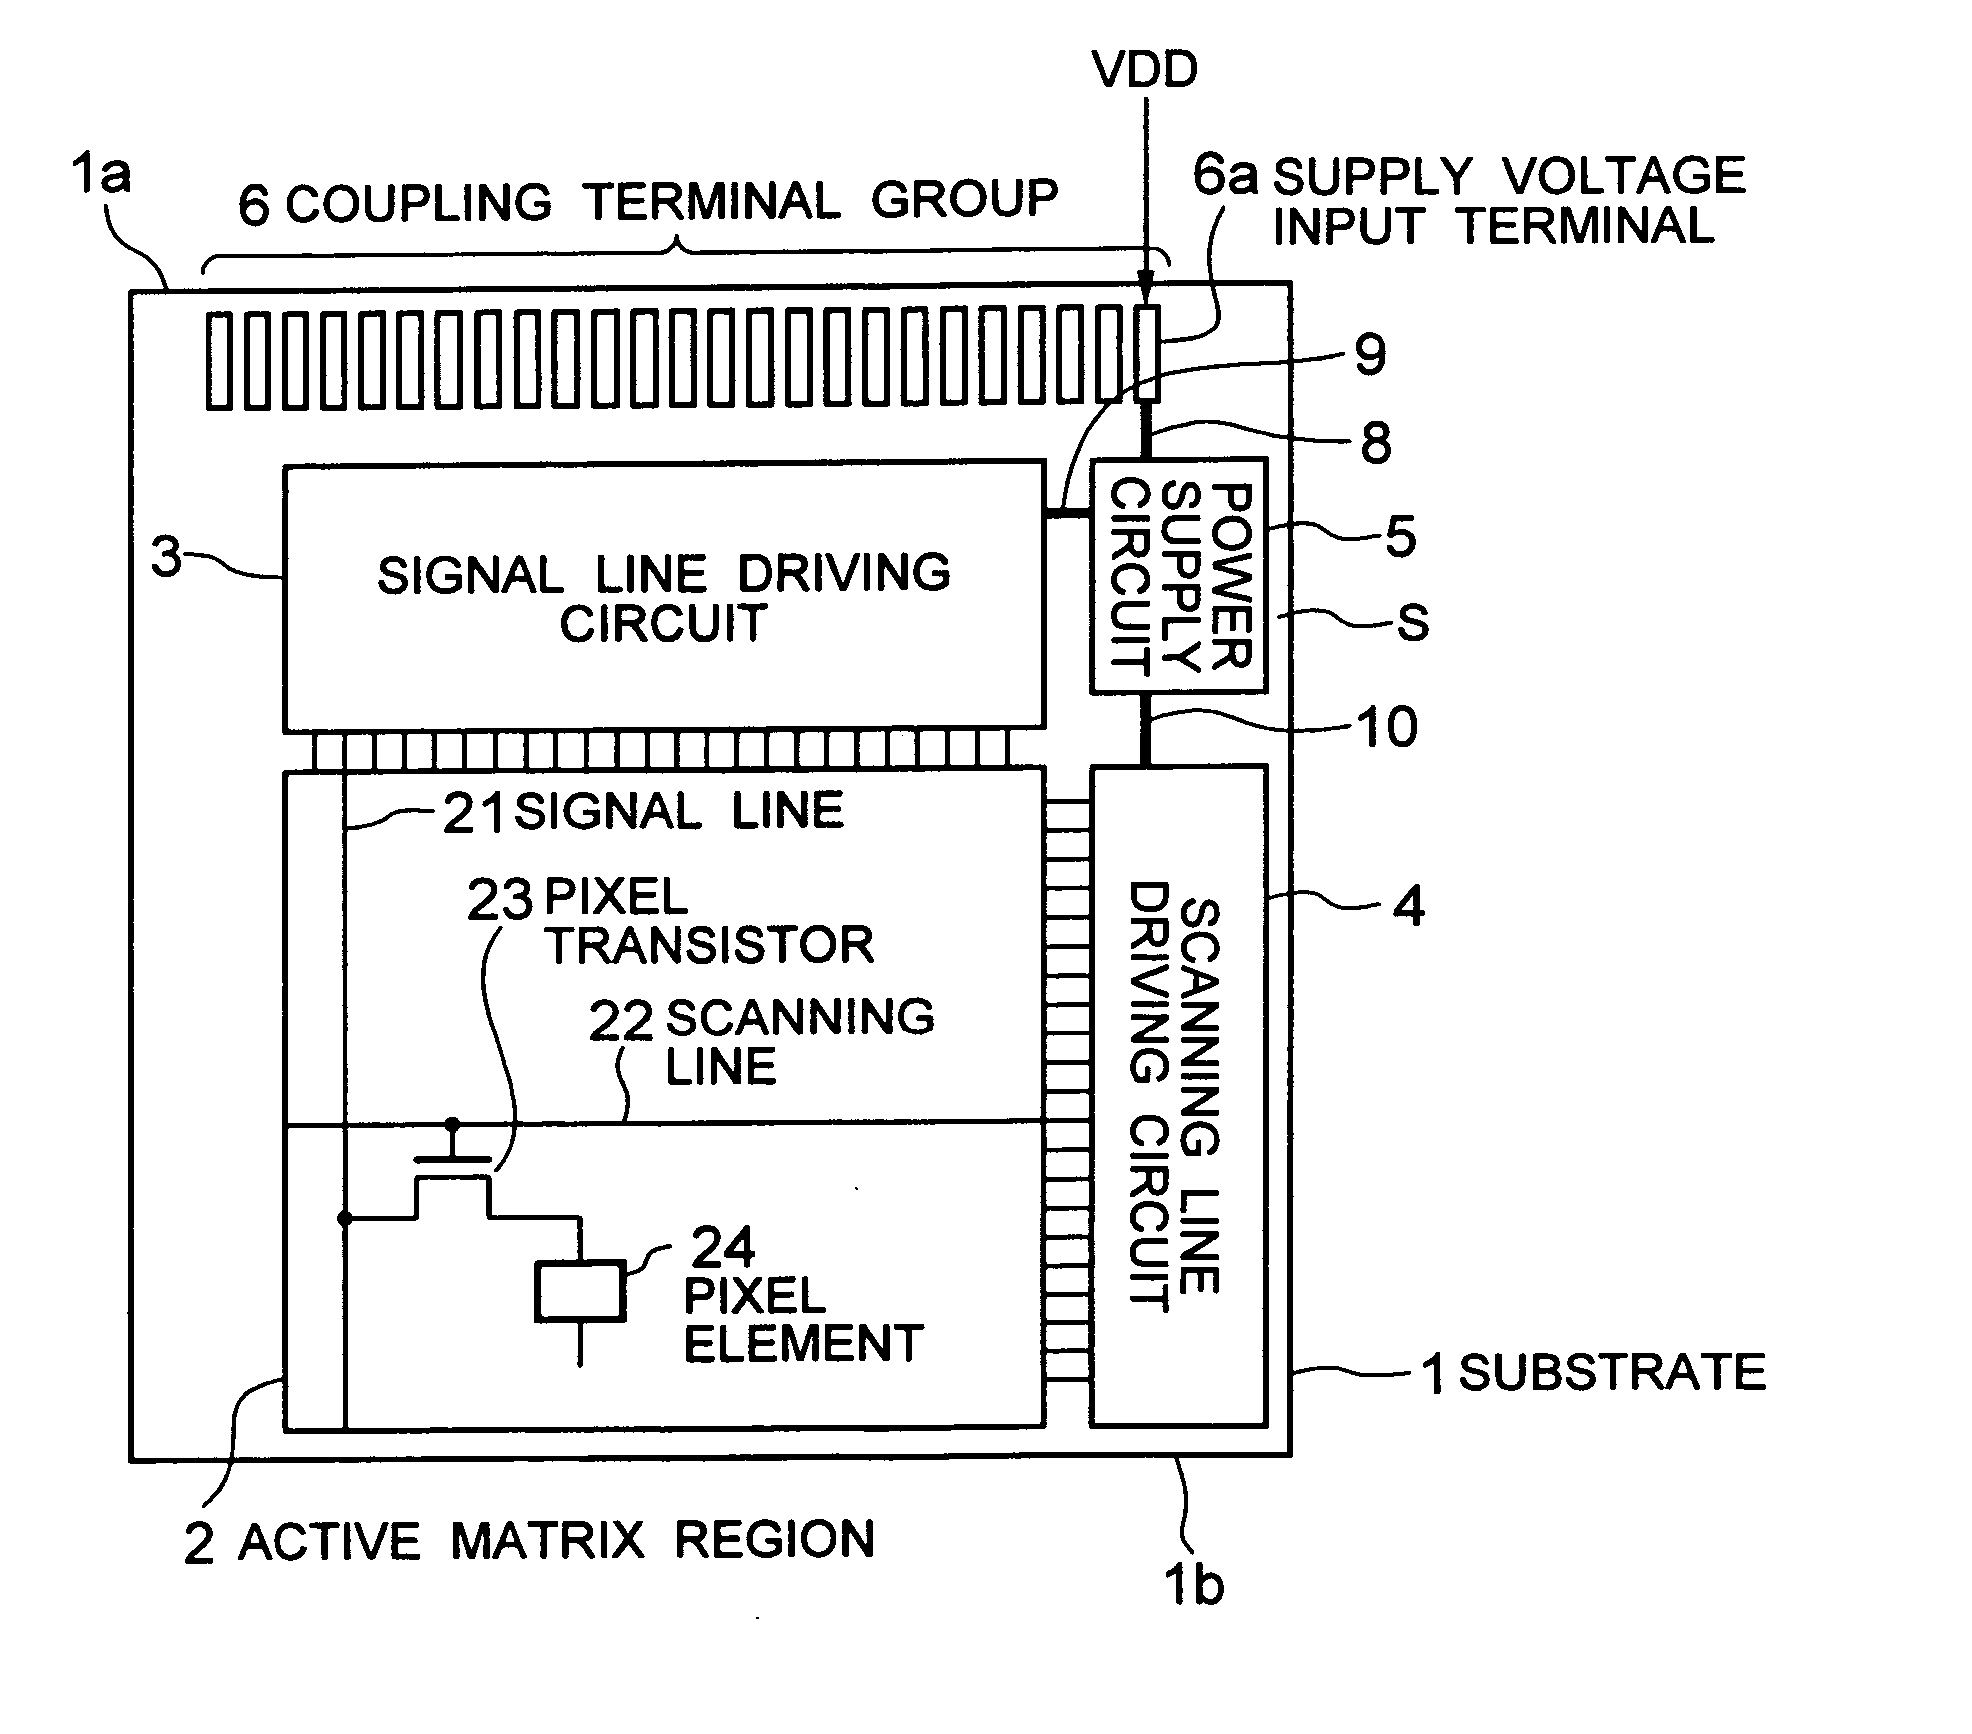 Active matrix type semiconductor device